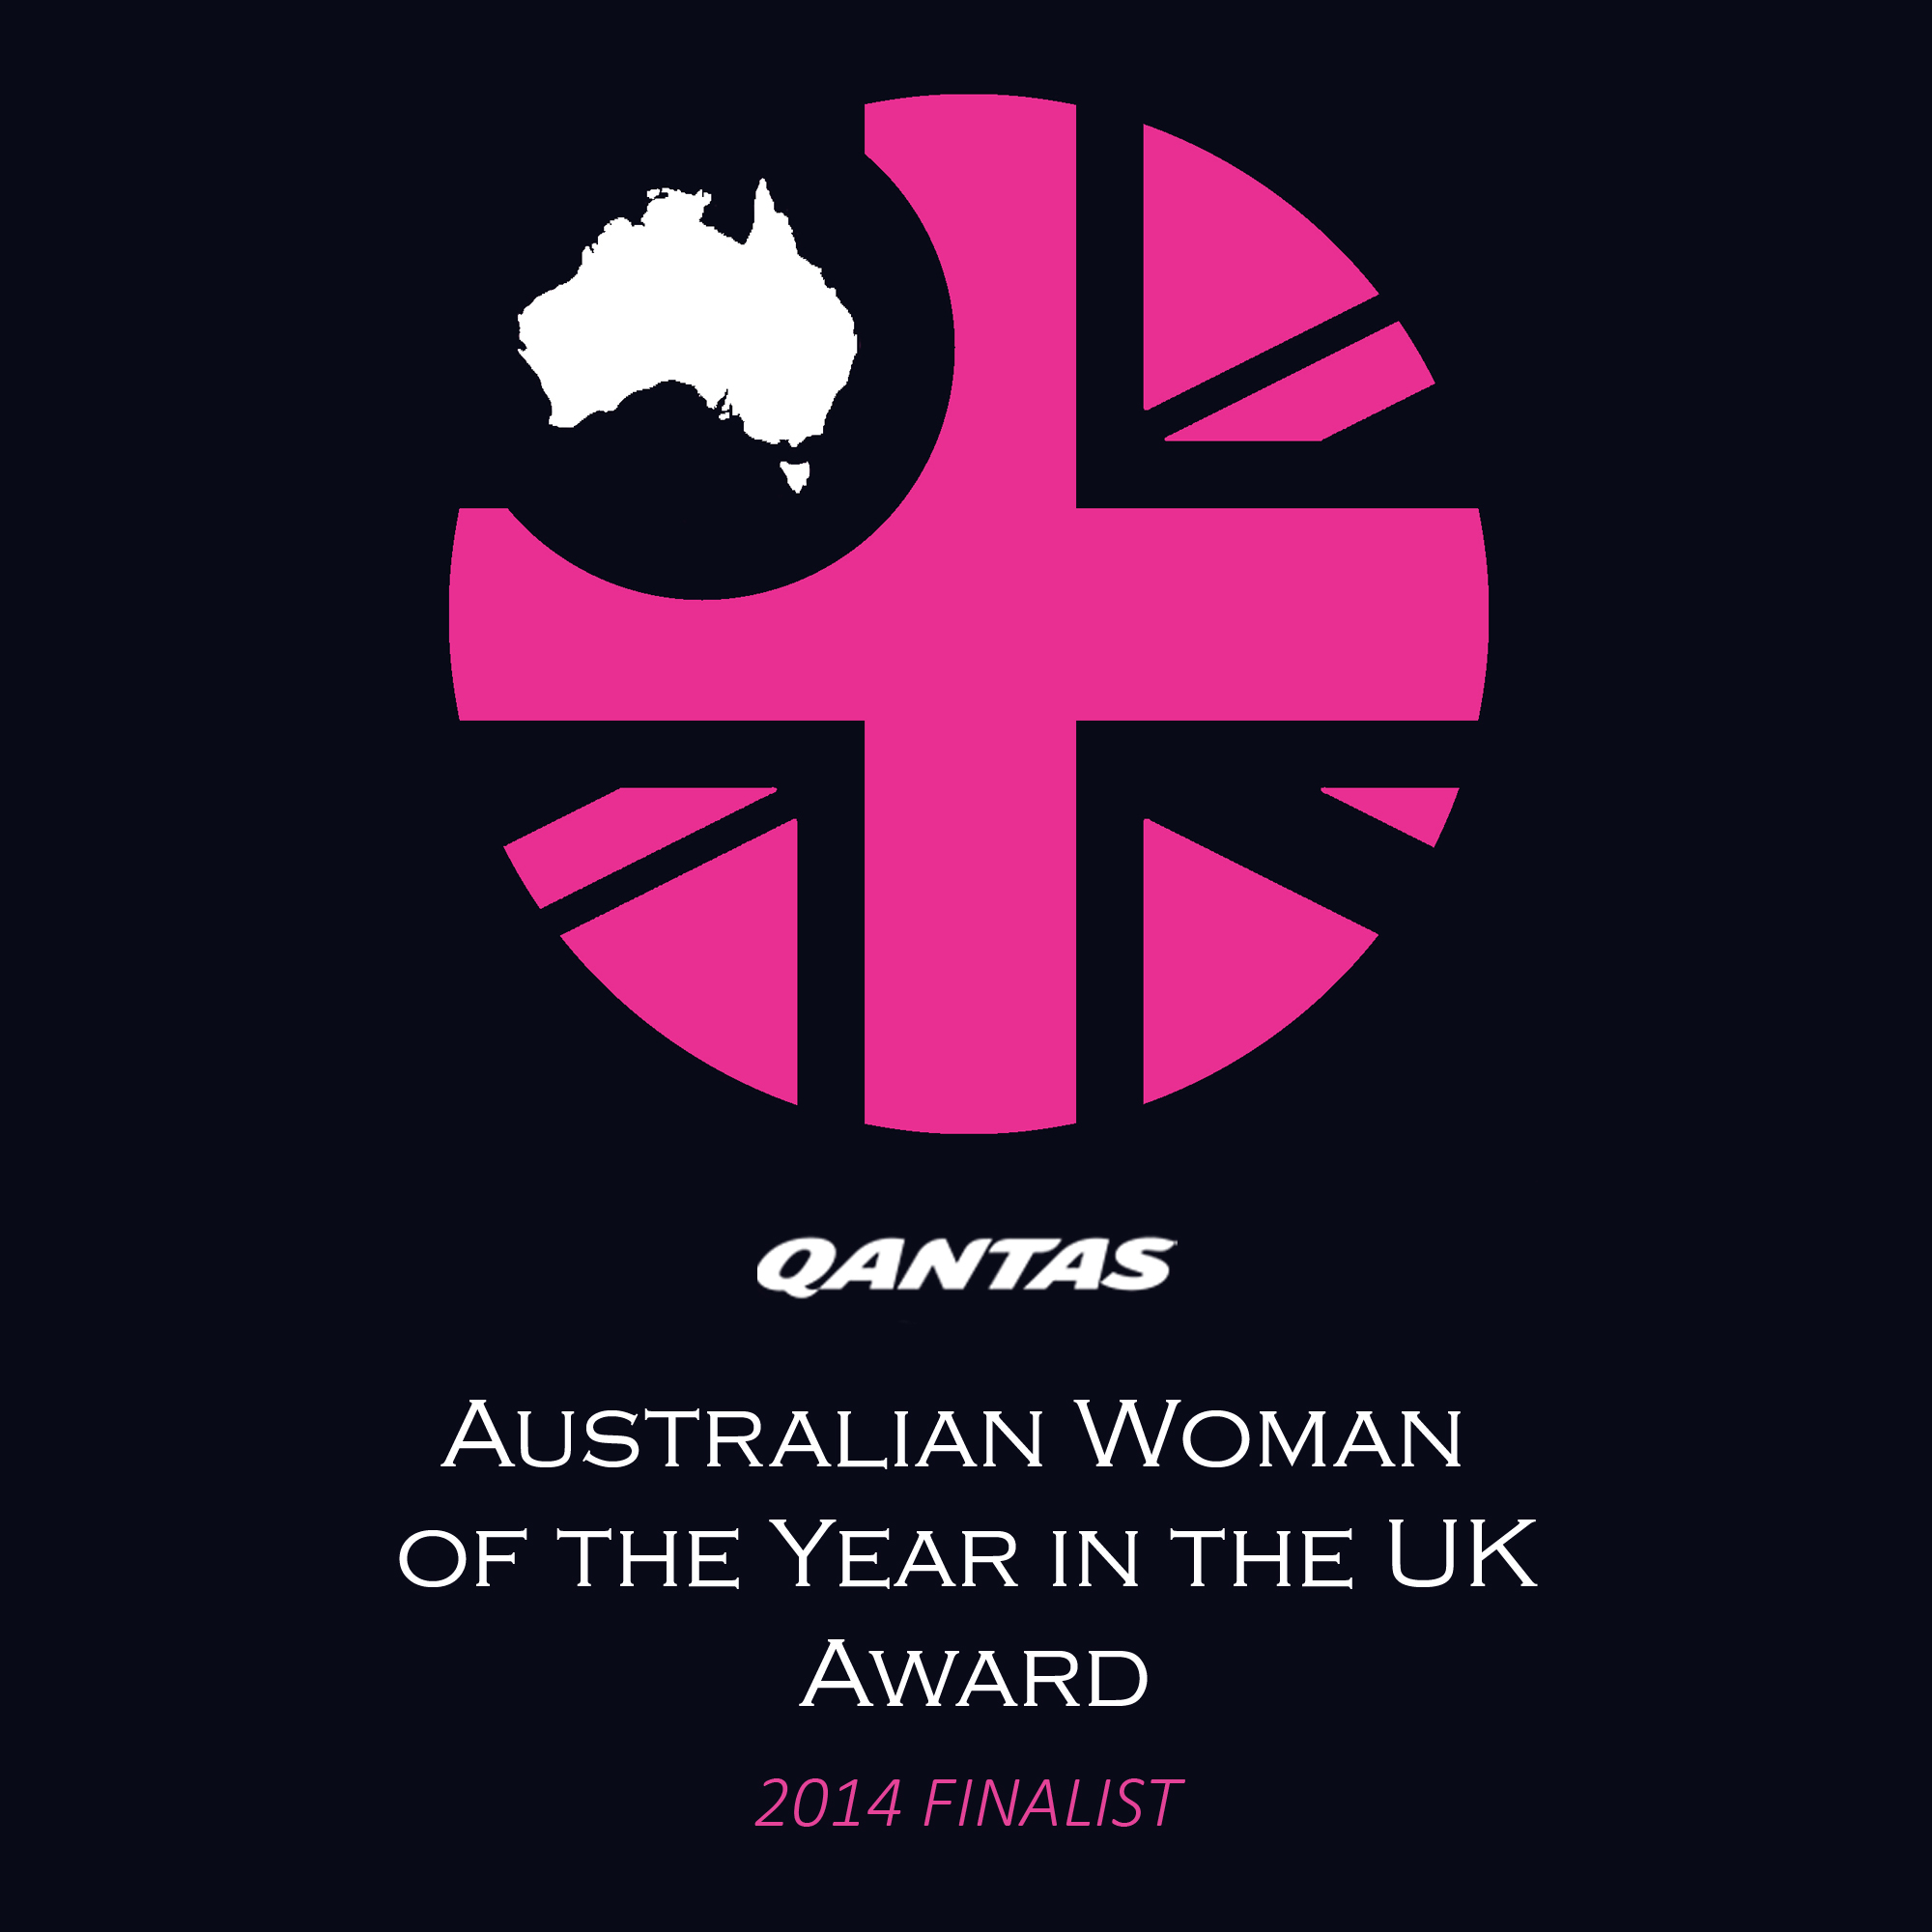 Qantas Australian Woman of the Year in the UK 2014